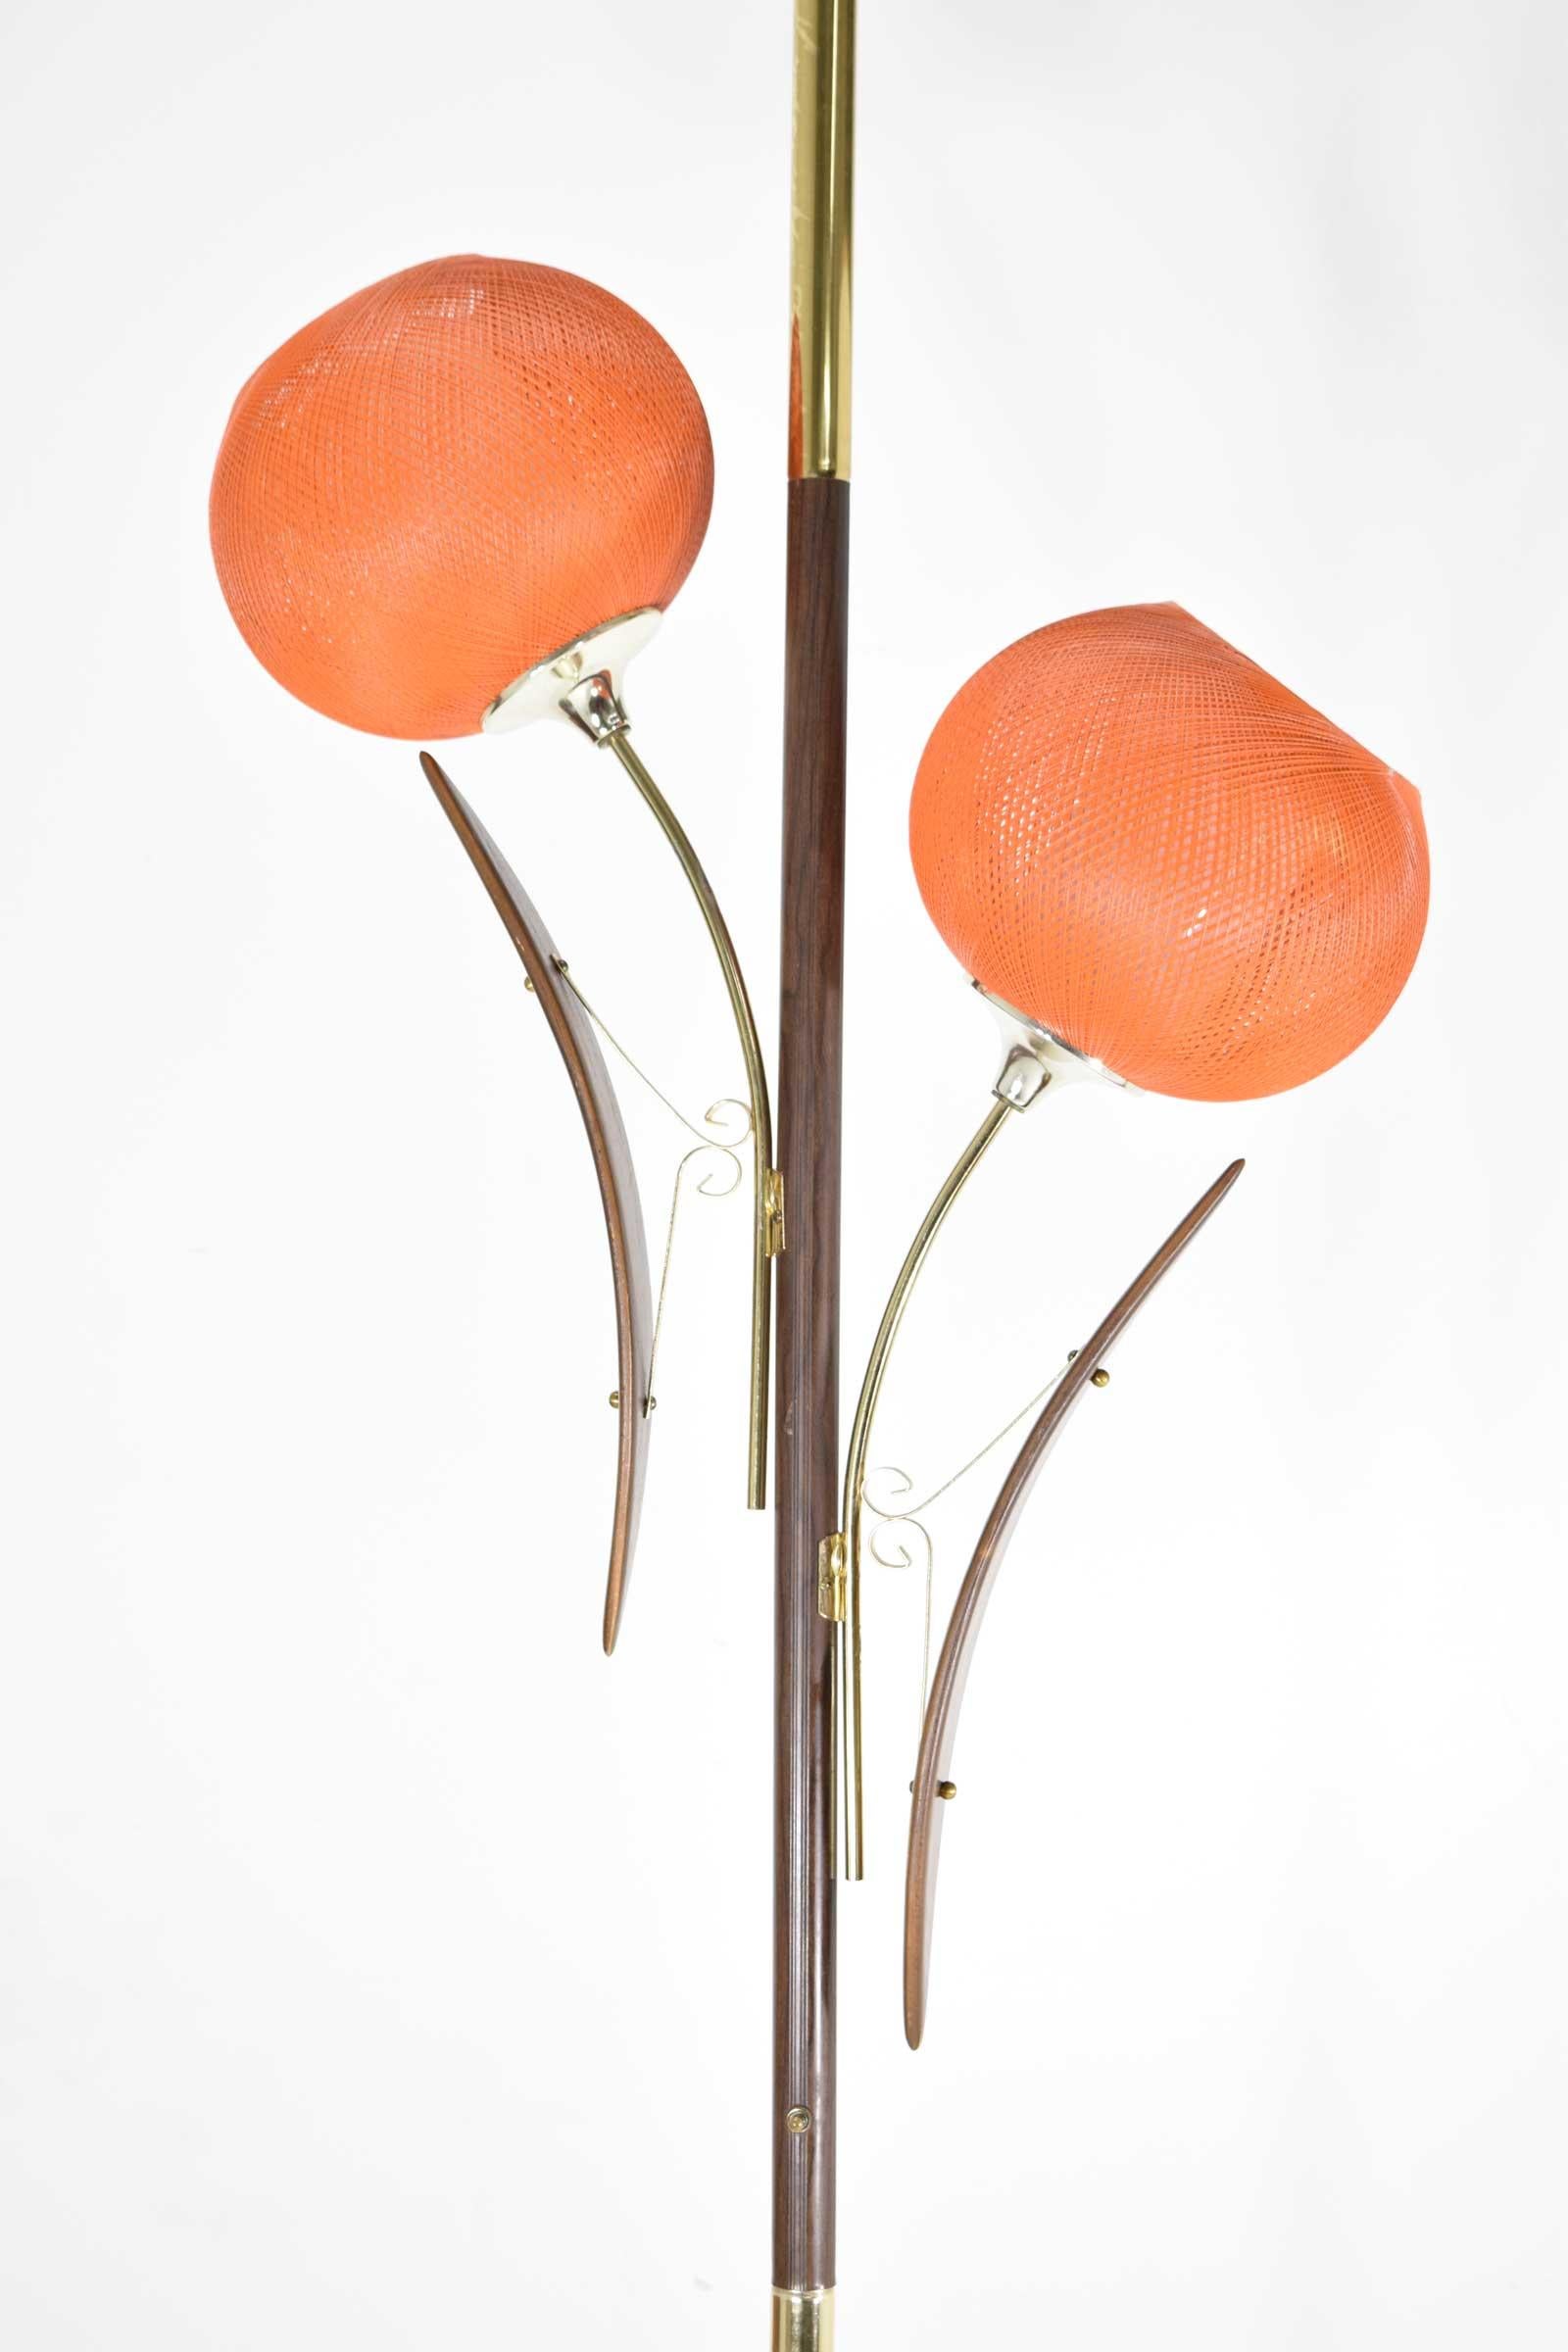 A really nice decorative midcentury tension pole lamp with orange spun fiberglass shades. Three way switch.